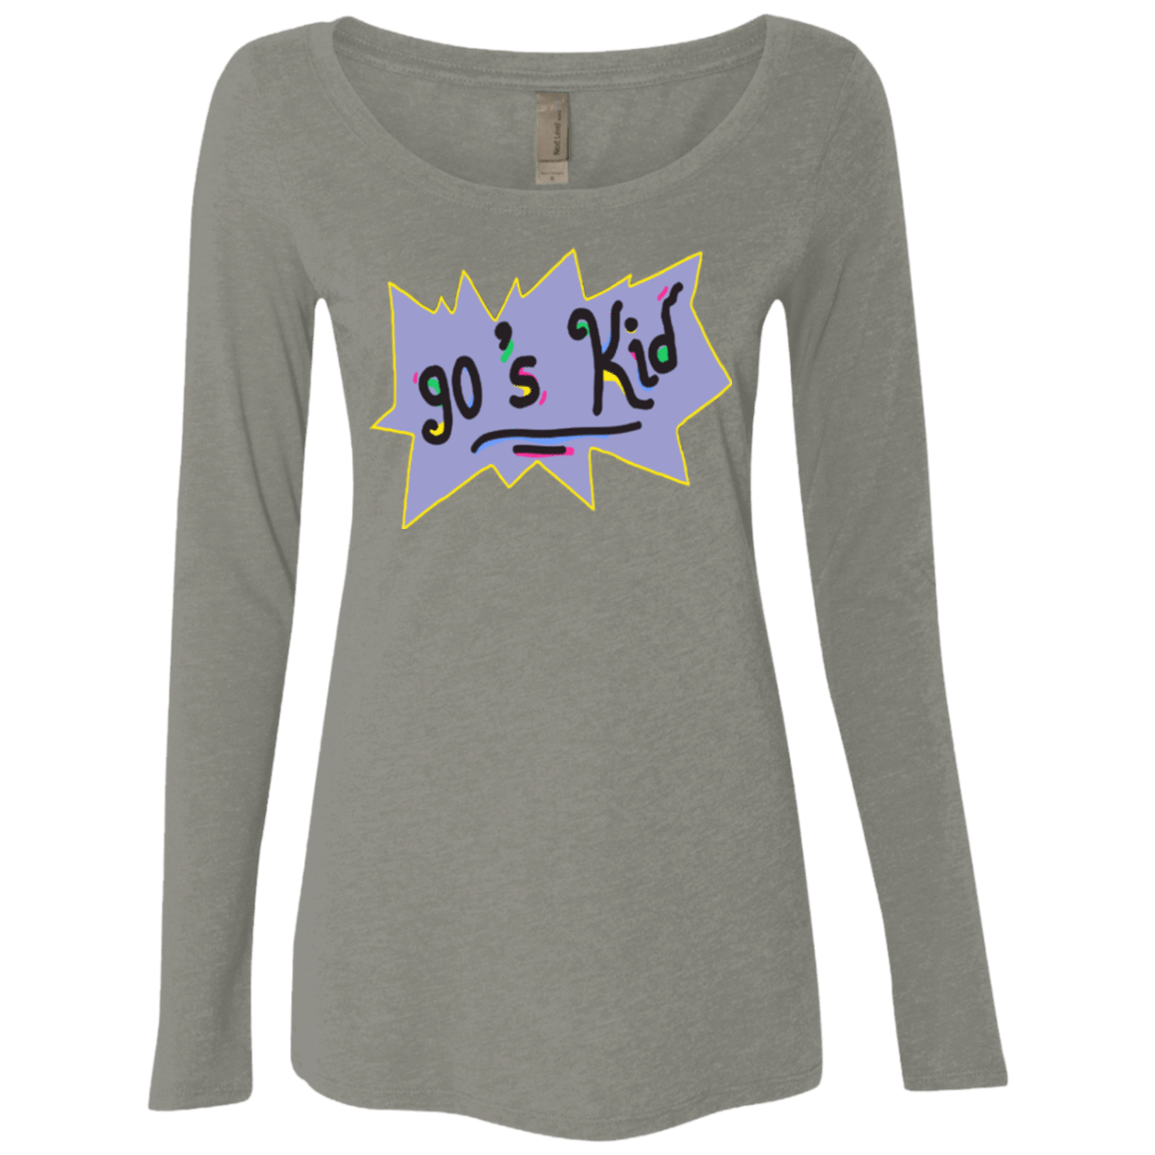 T-Shirts Venetian Grey / Small 90's Kid Women's Triblend Long Sleeve Shirt